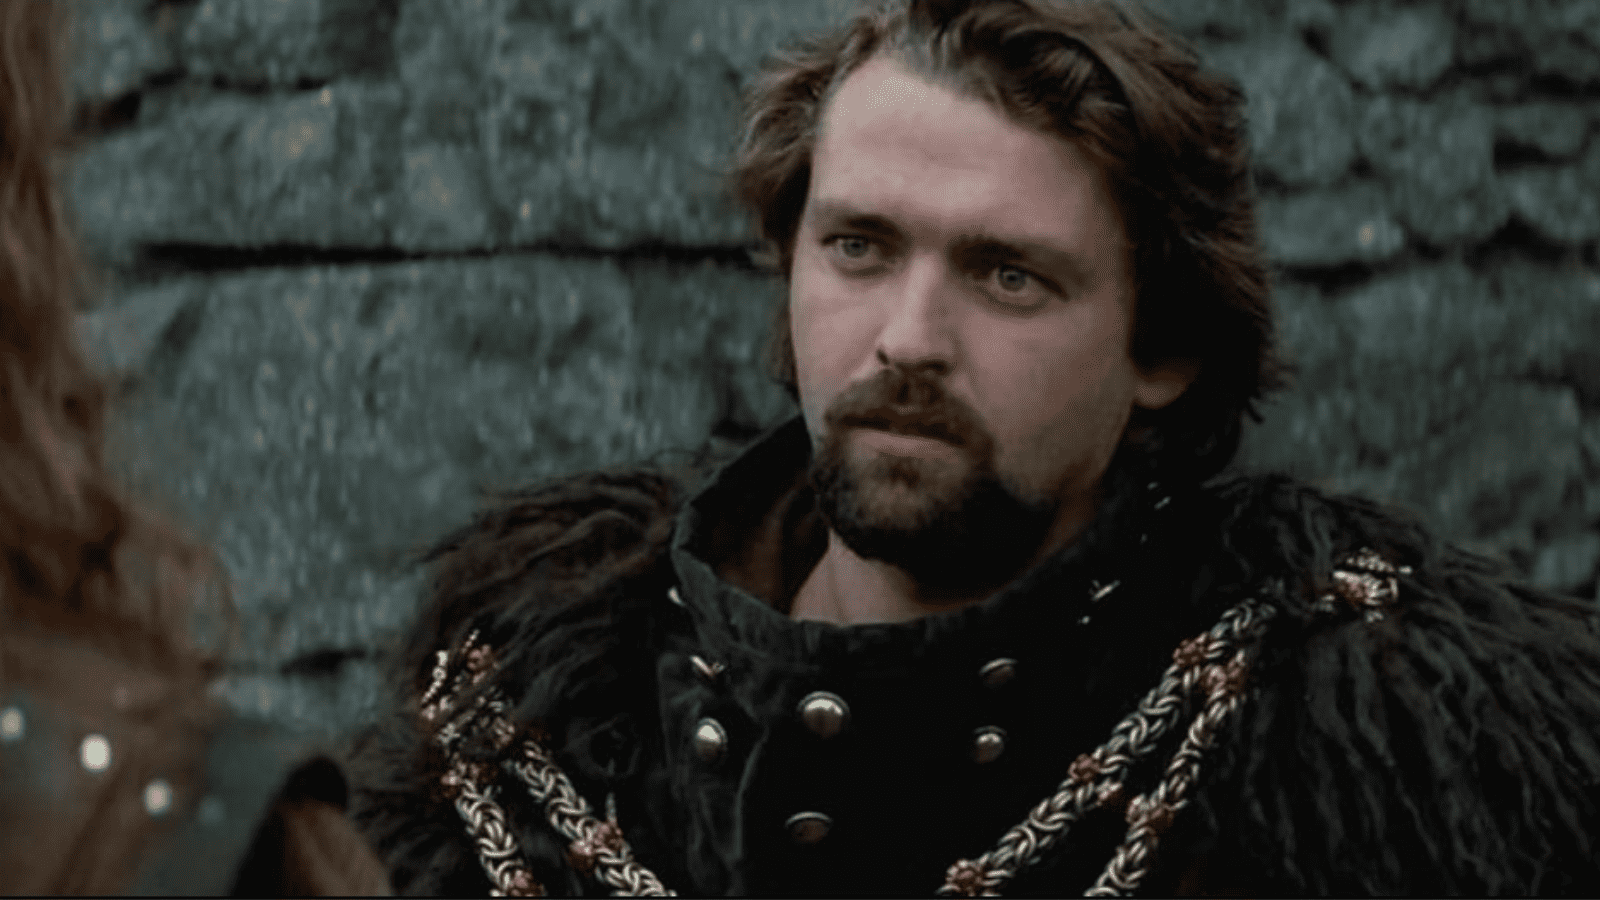 Robert the Bruce in Braveheart